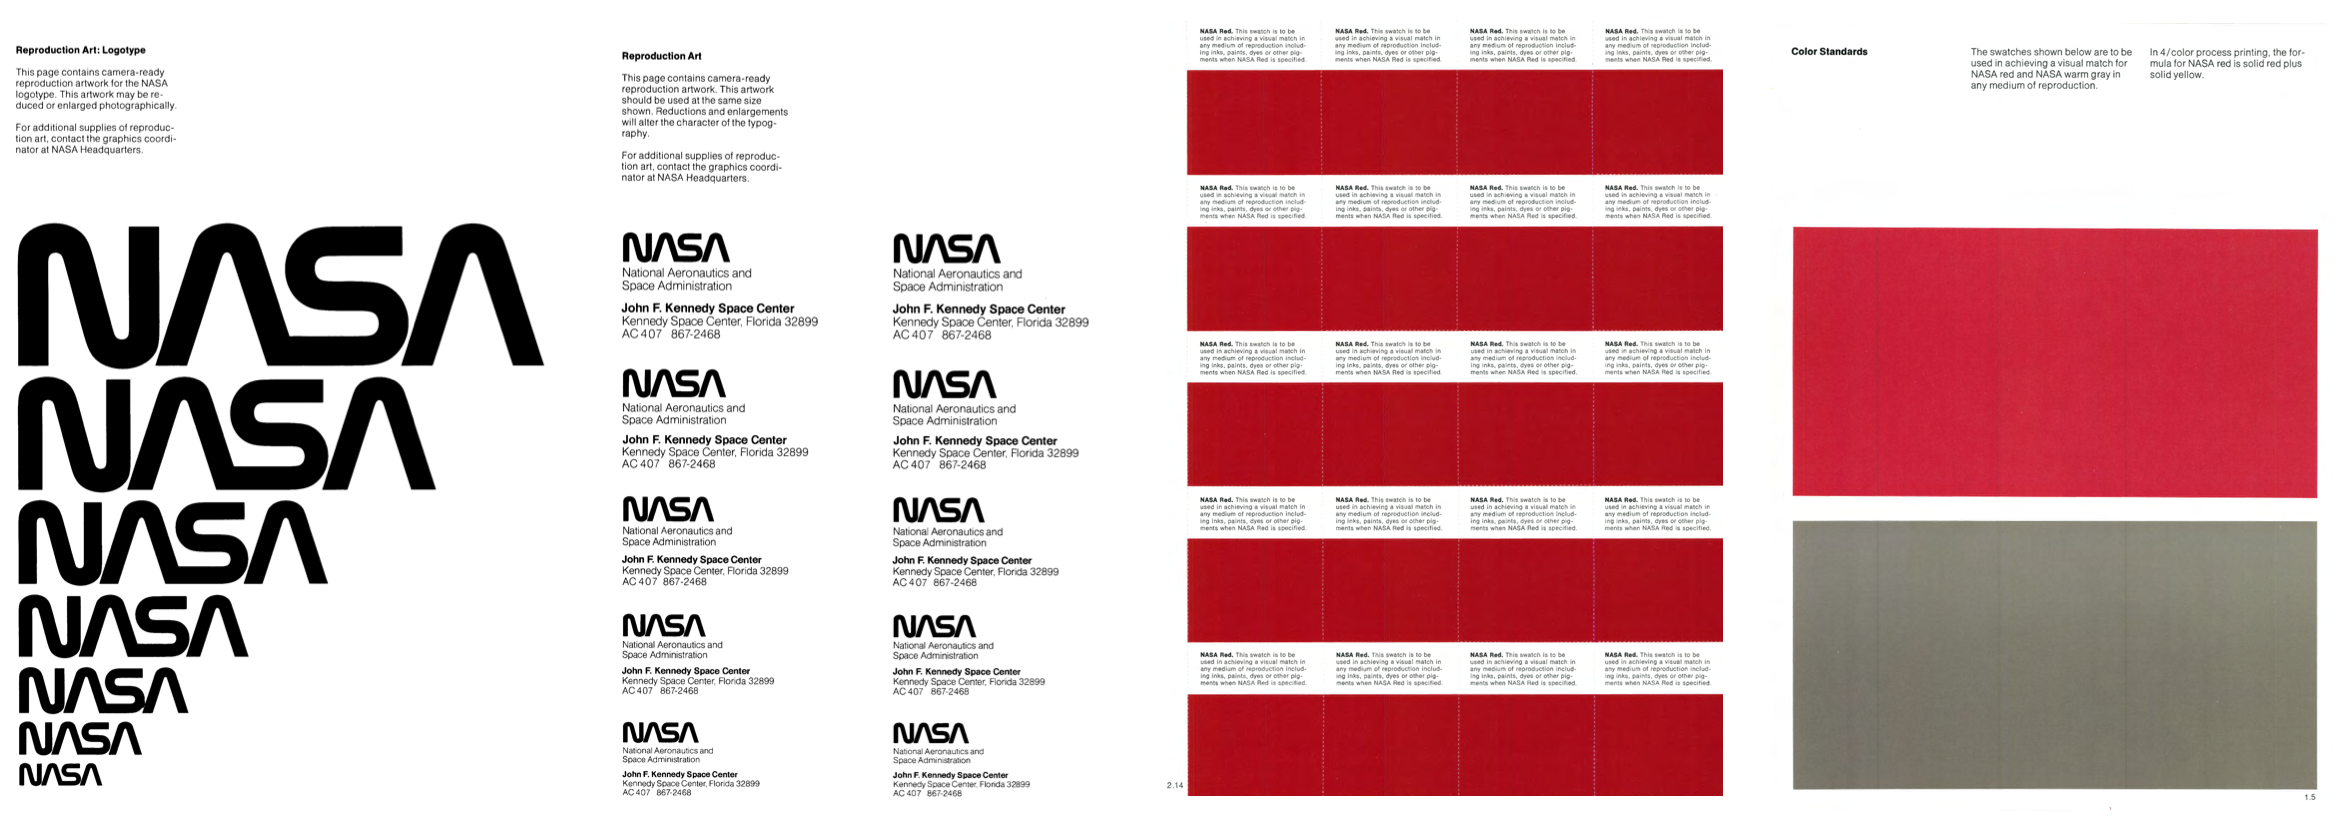 Nasa graphics standards manual